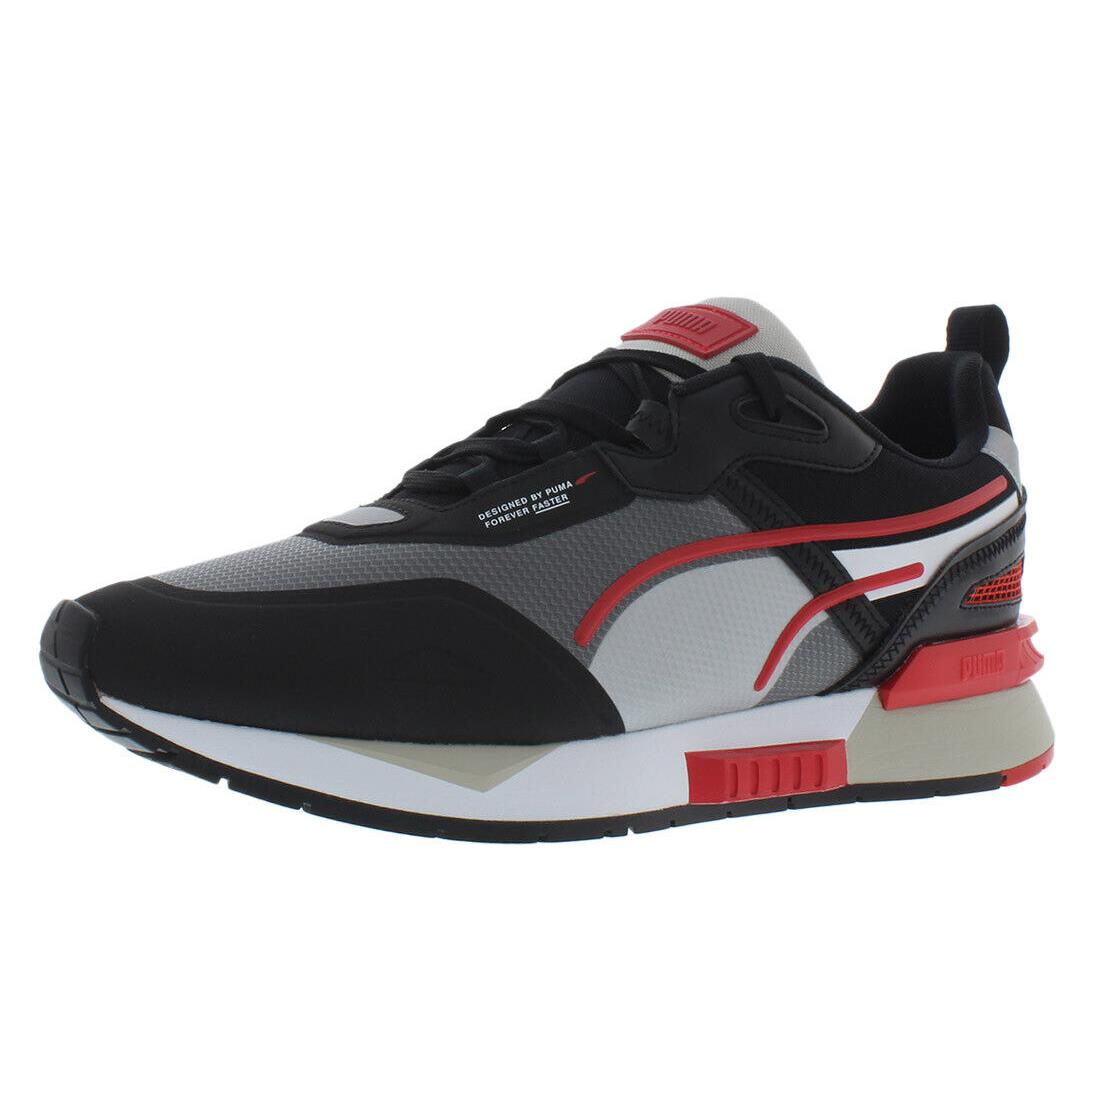 Puma Mirage Tech Mens Shoes - Black/Red/White, Main: Black